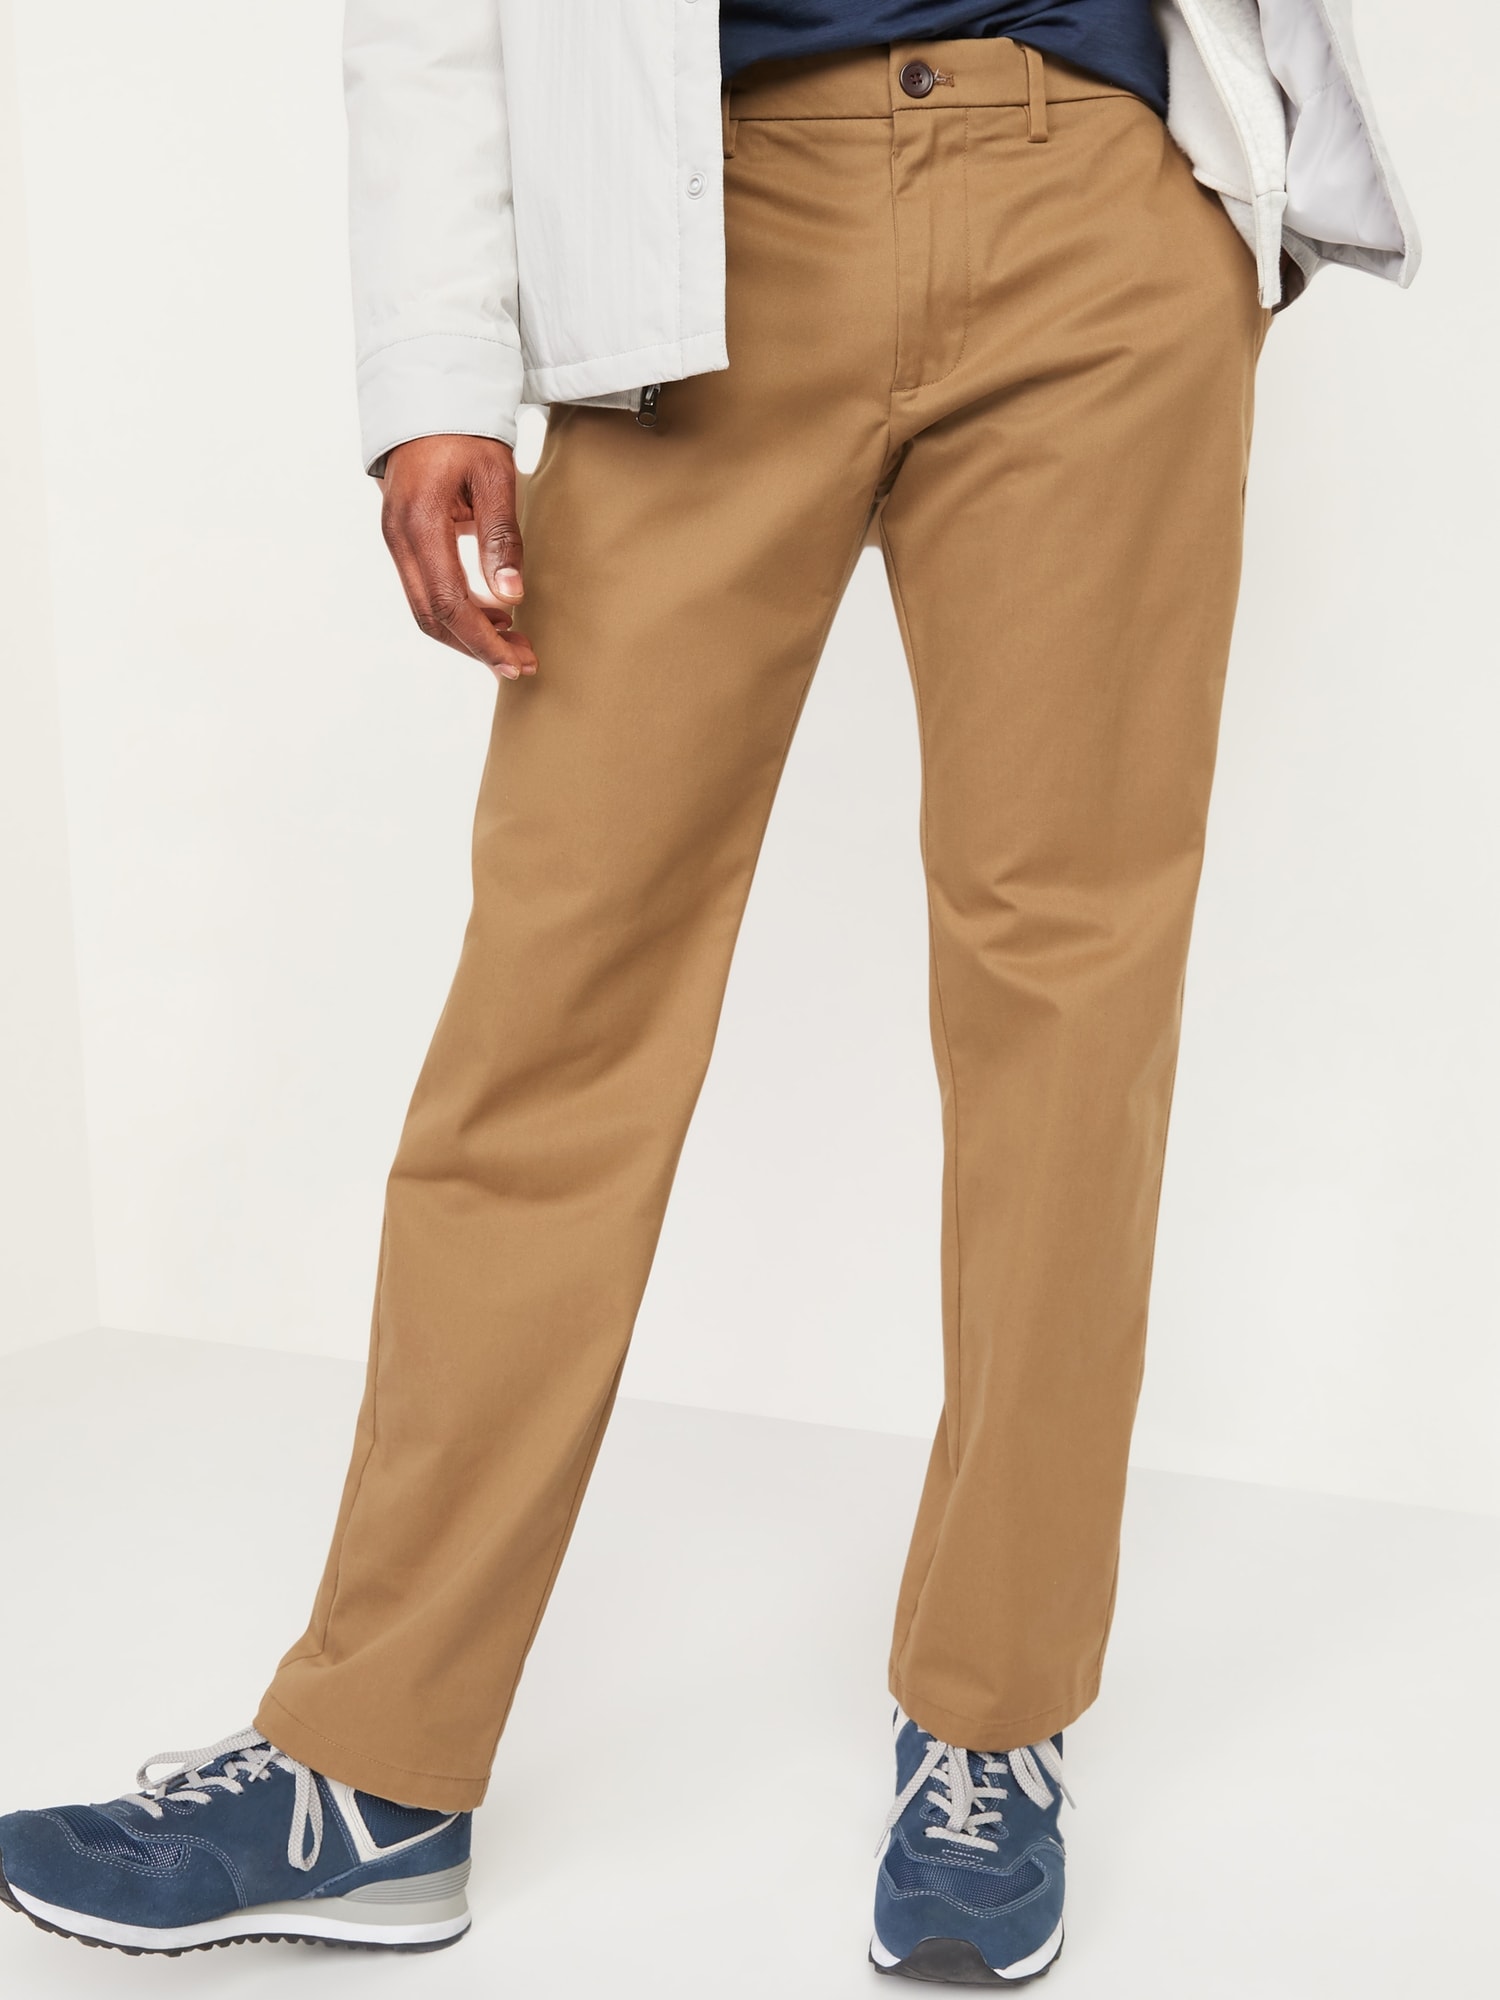 Cheap Men Sports Trousers Long Pants Pockets Loose Casual Fashion Outdoors  | Joom